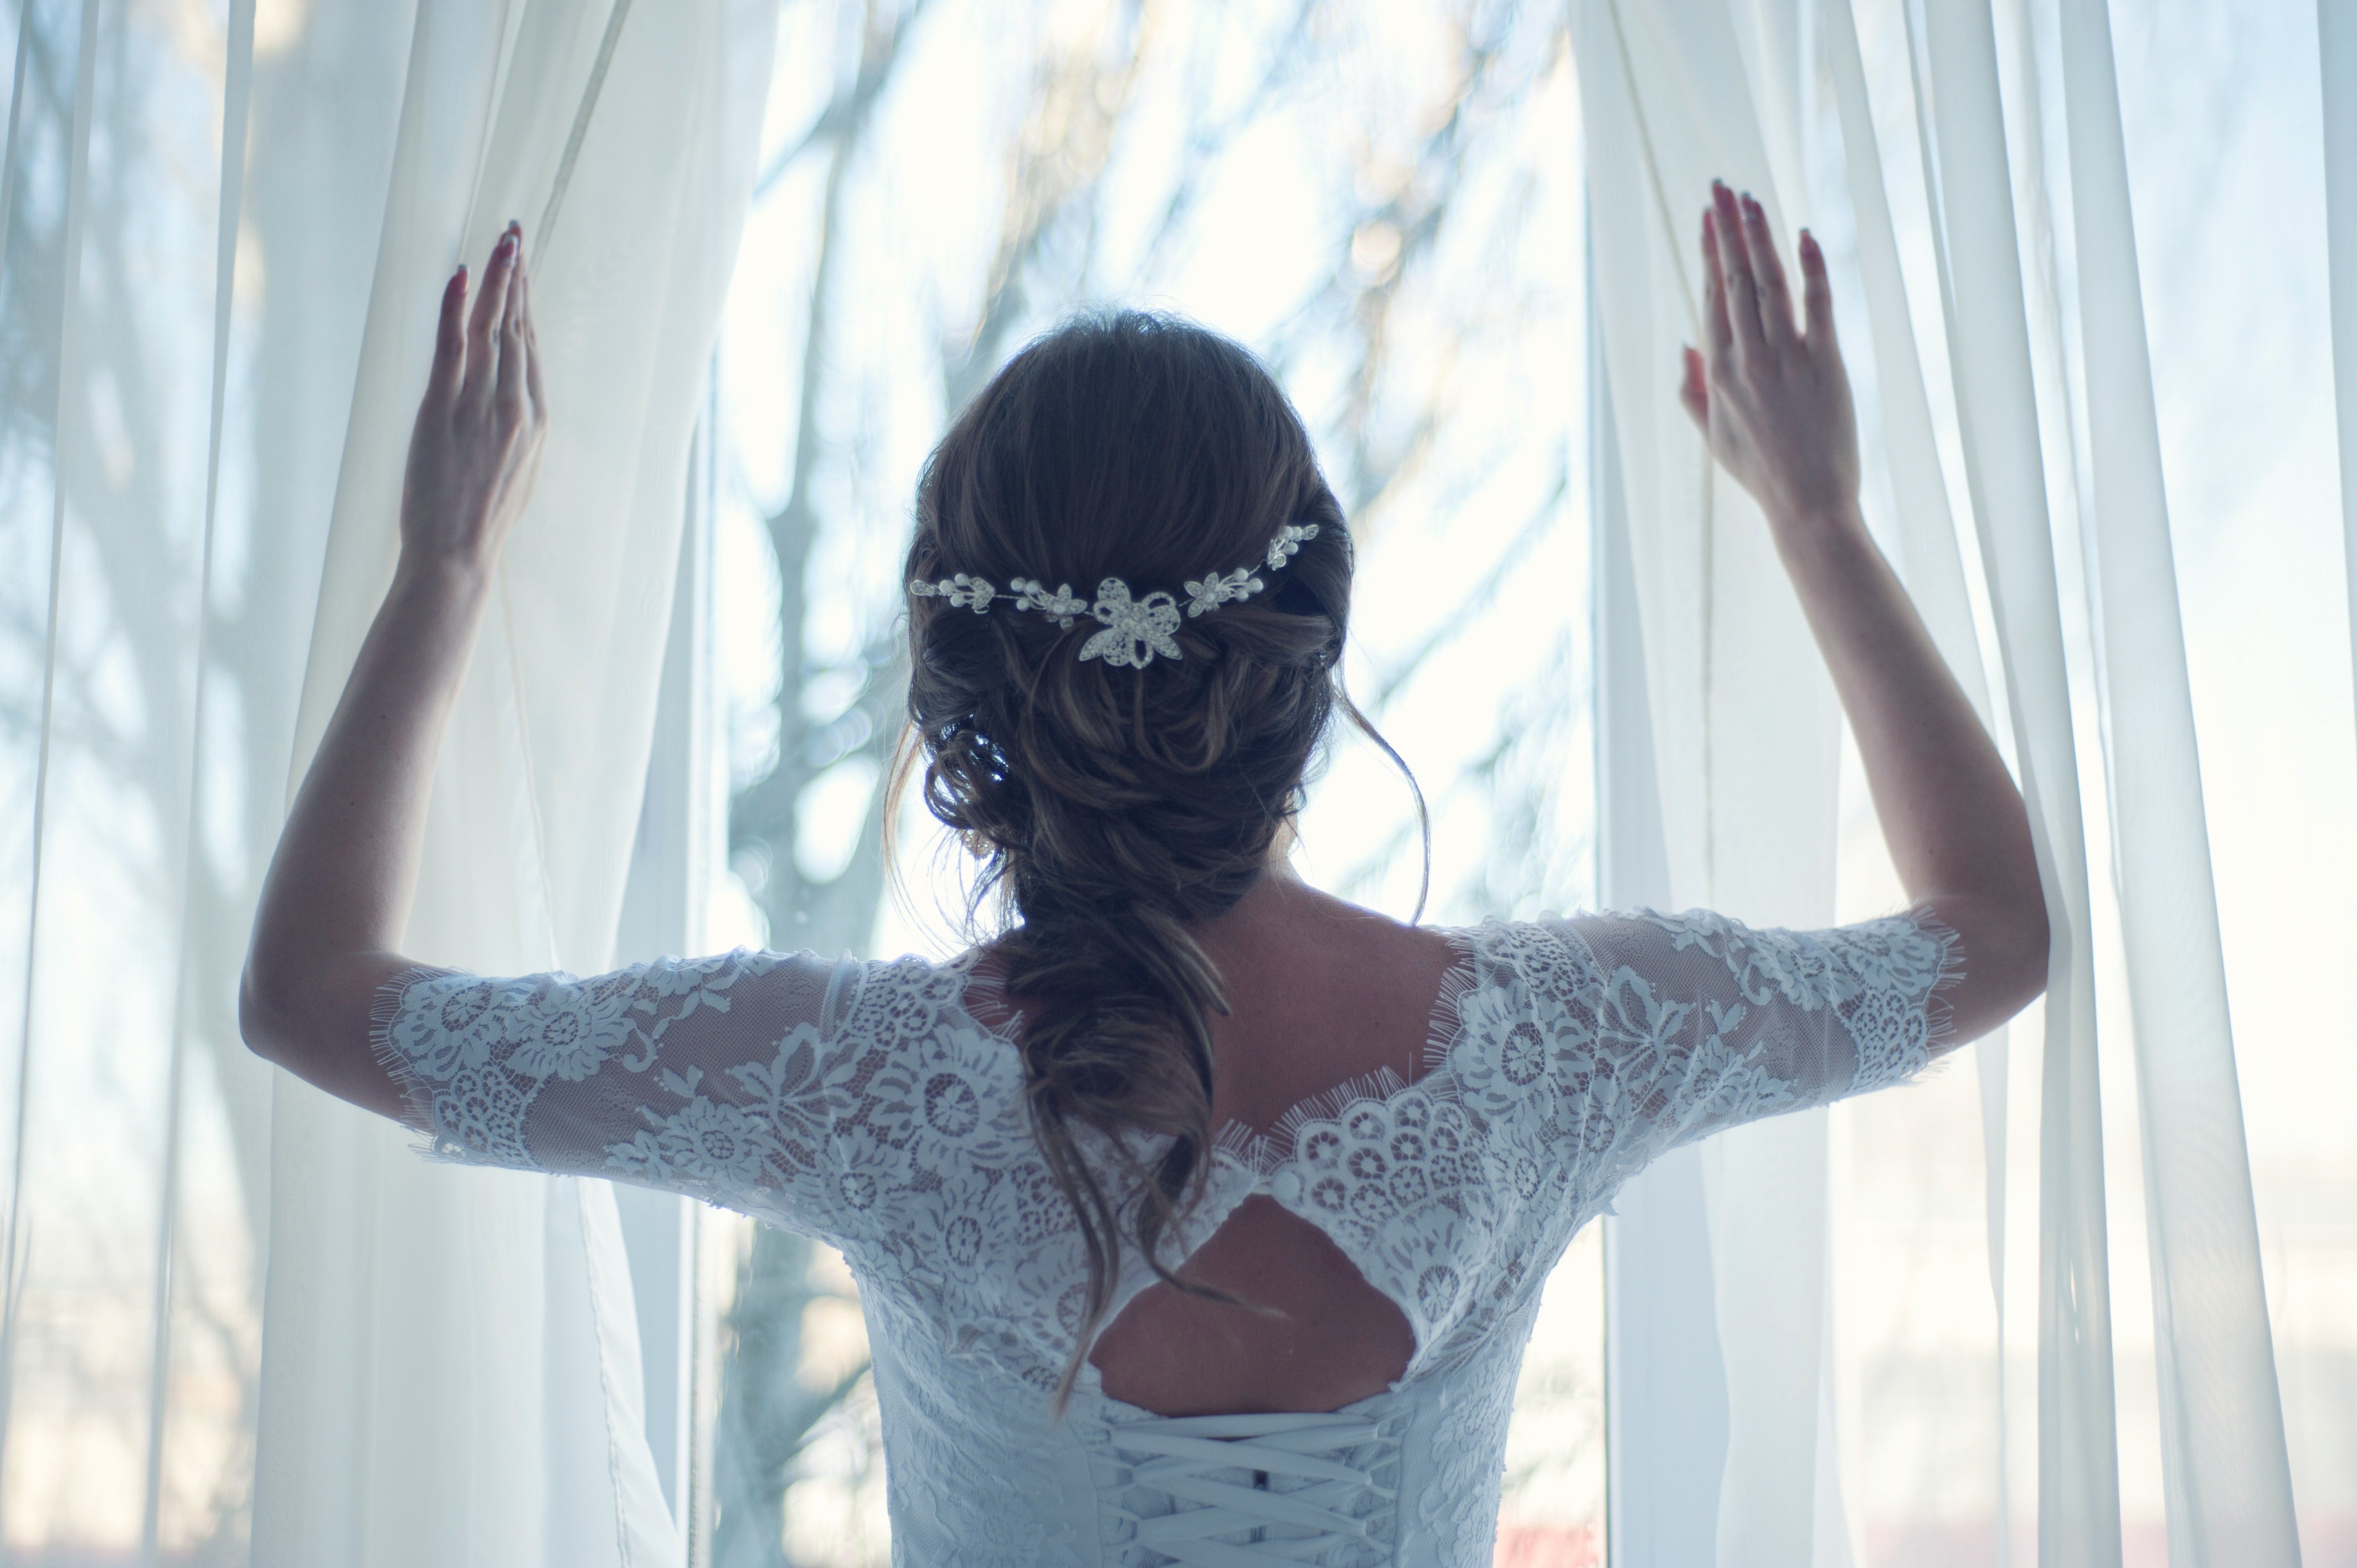 The bride had never met her fiancé's mother before | Photo: Pexels